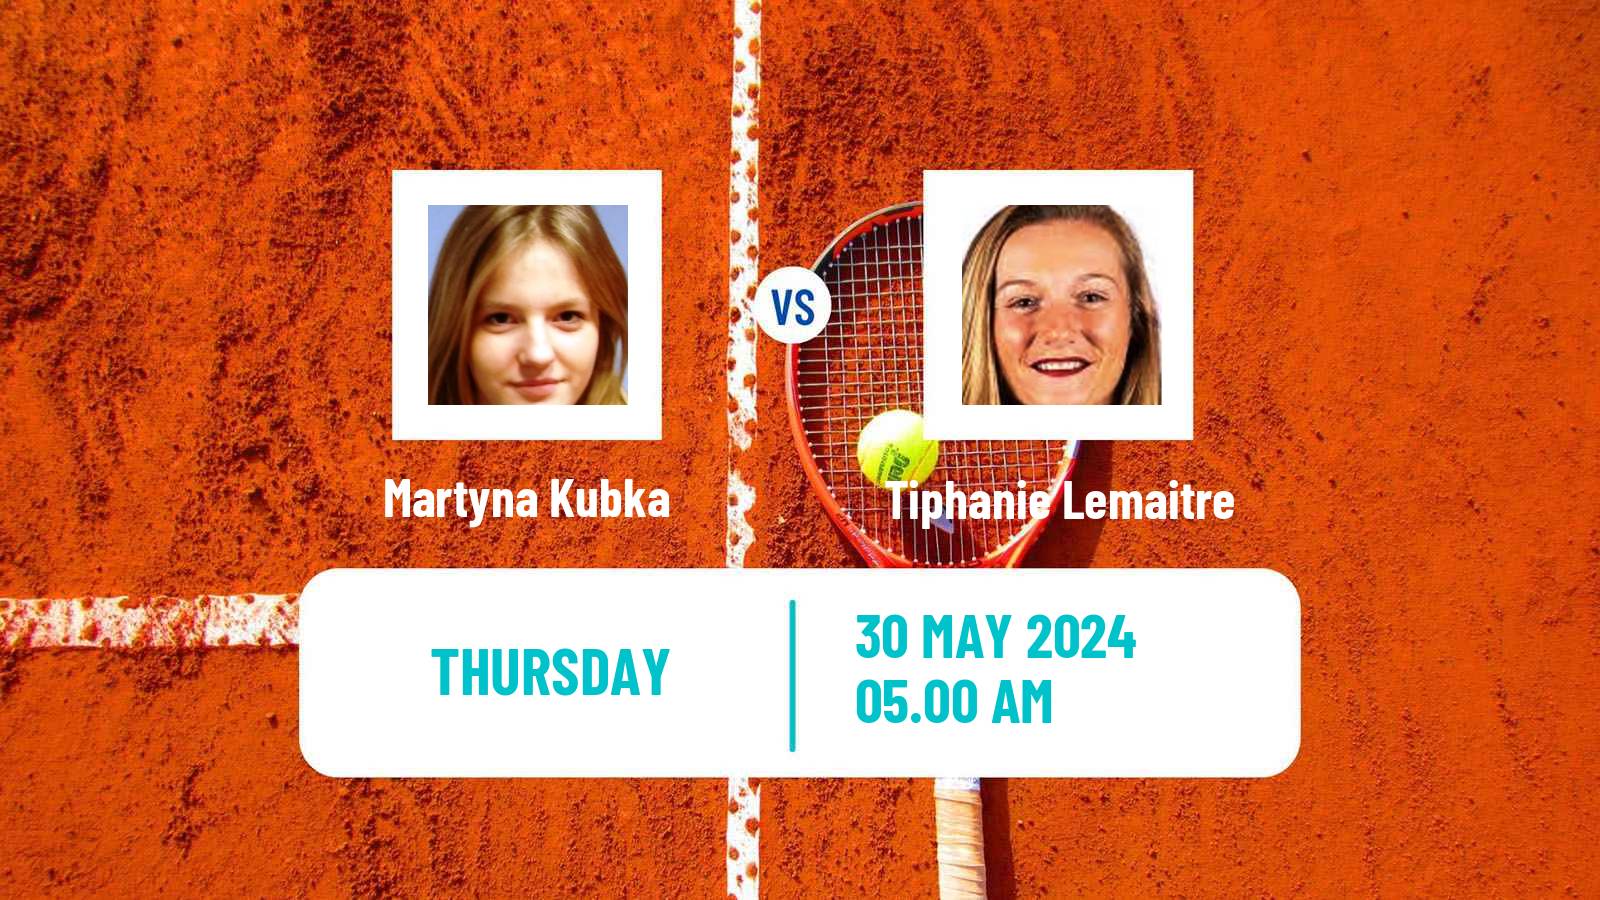 Tennis ITF W35 La Marsa Women Martyna Kubka - Tiphanie Lemaitre